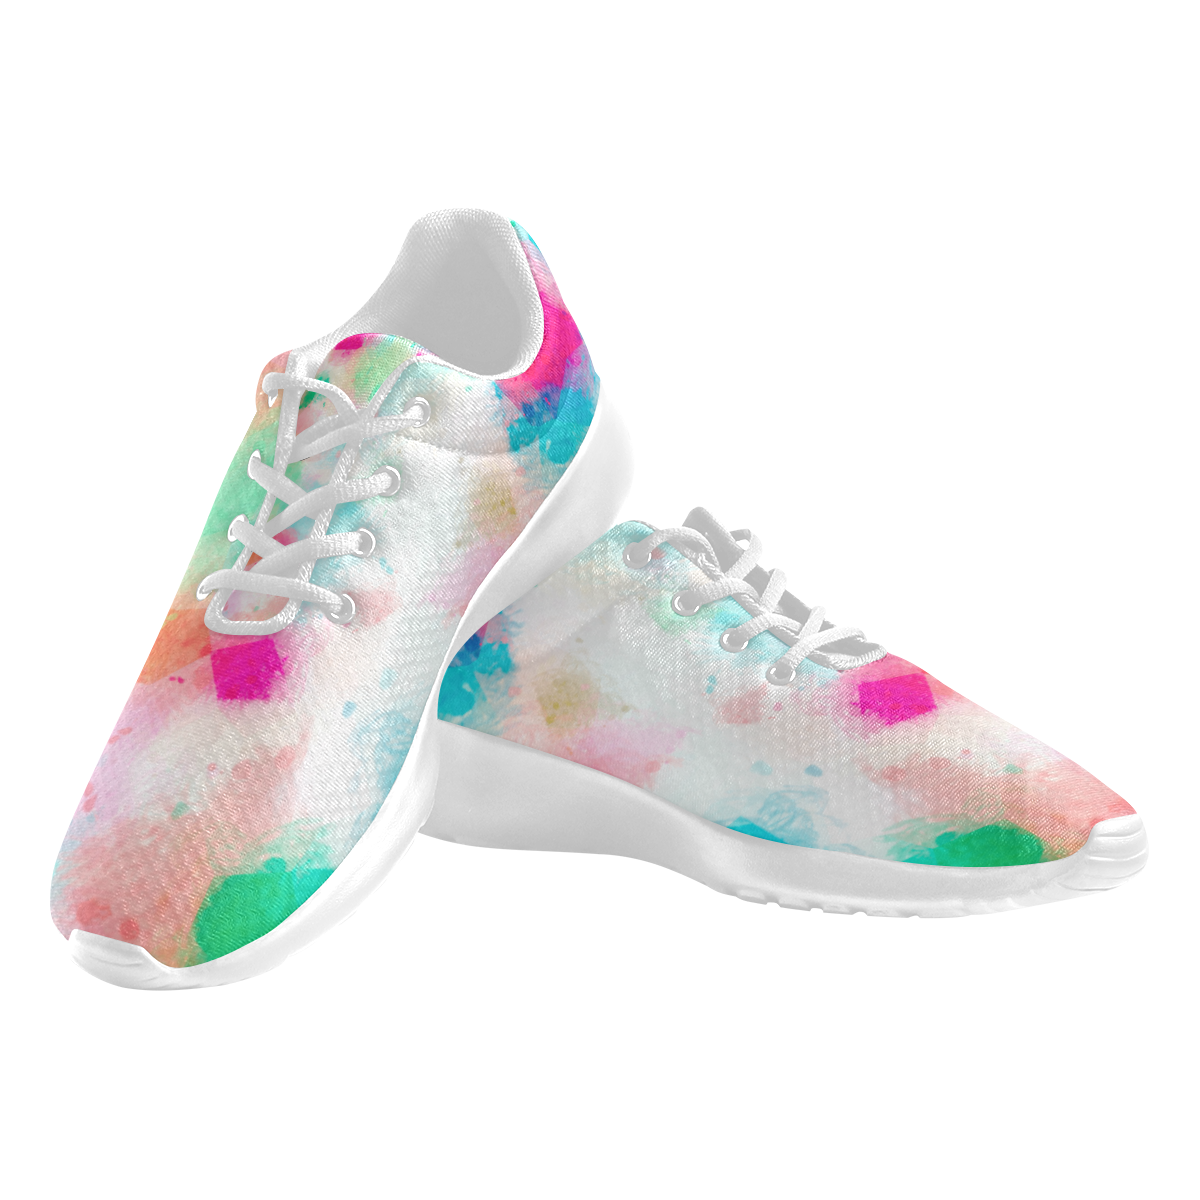 painteddreams Women's Athletic Shoes (Model 0200)